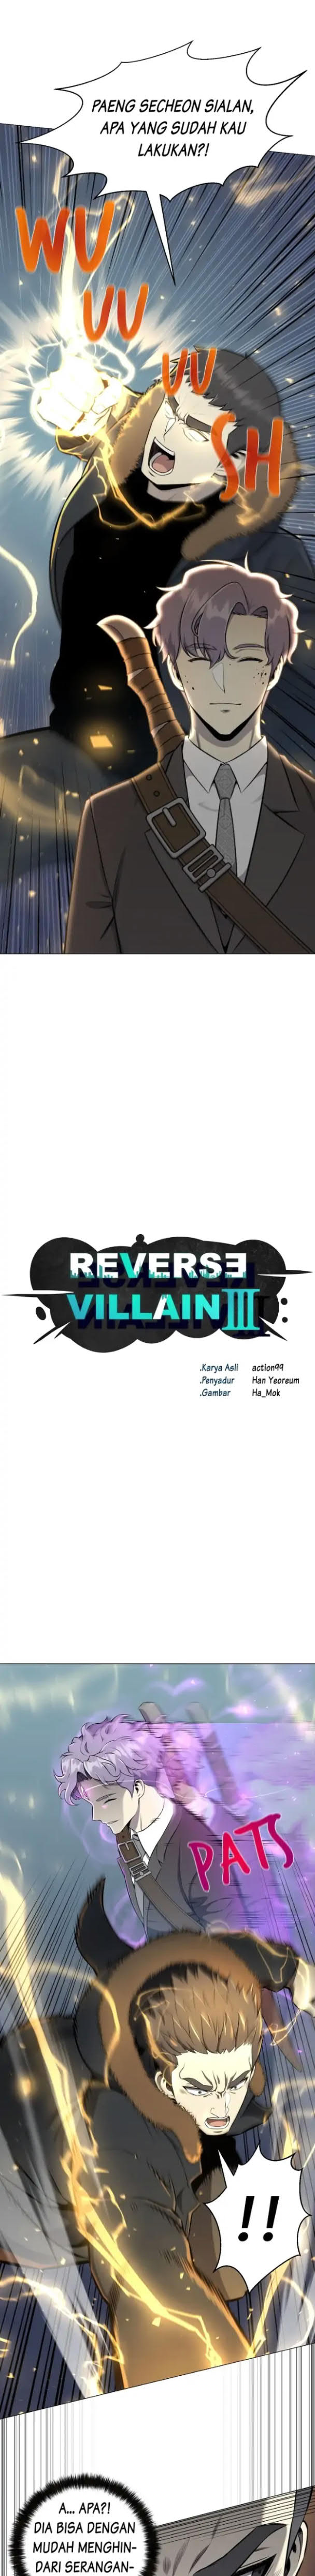 Reverse Villain Id Chapter 86 - 199